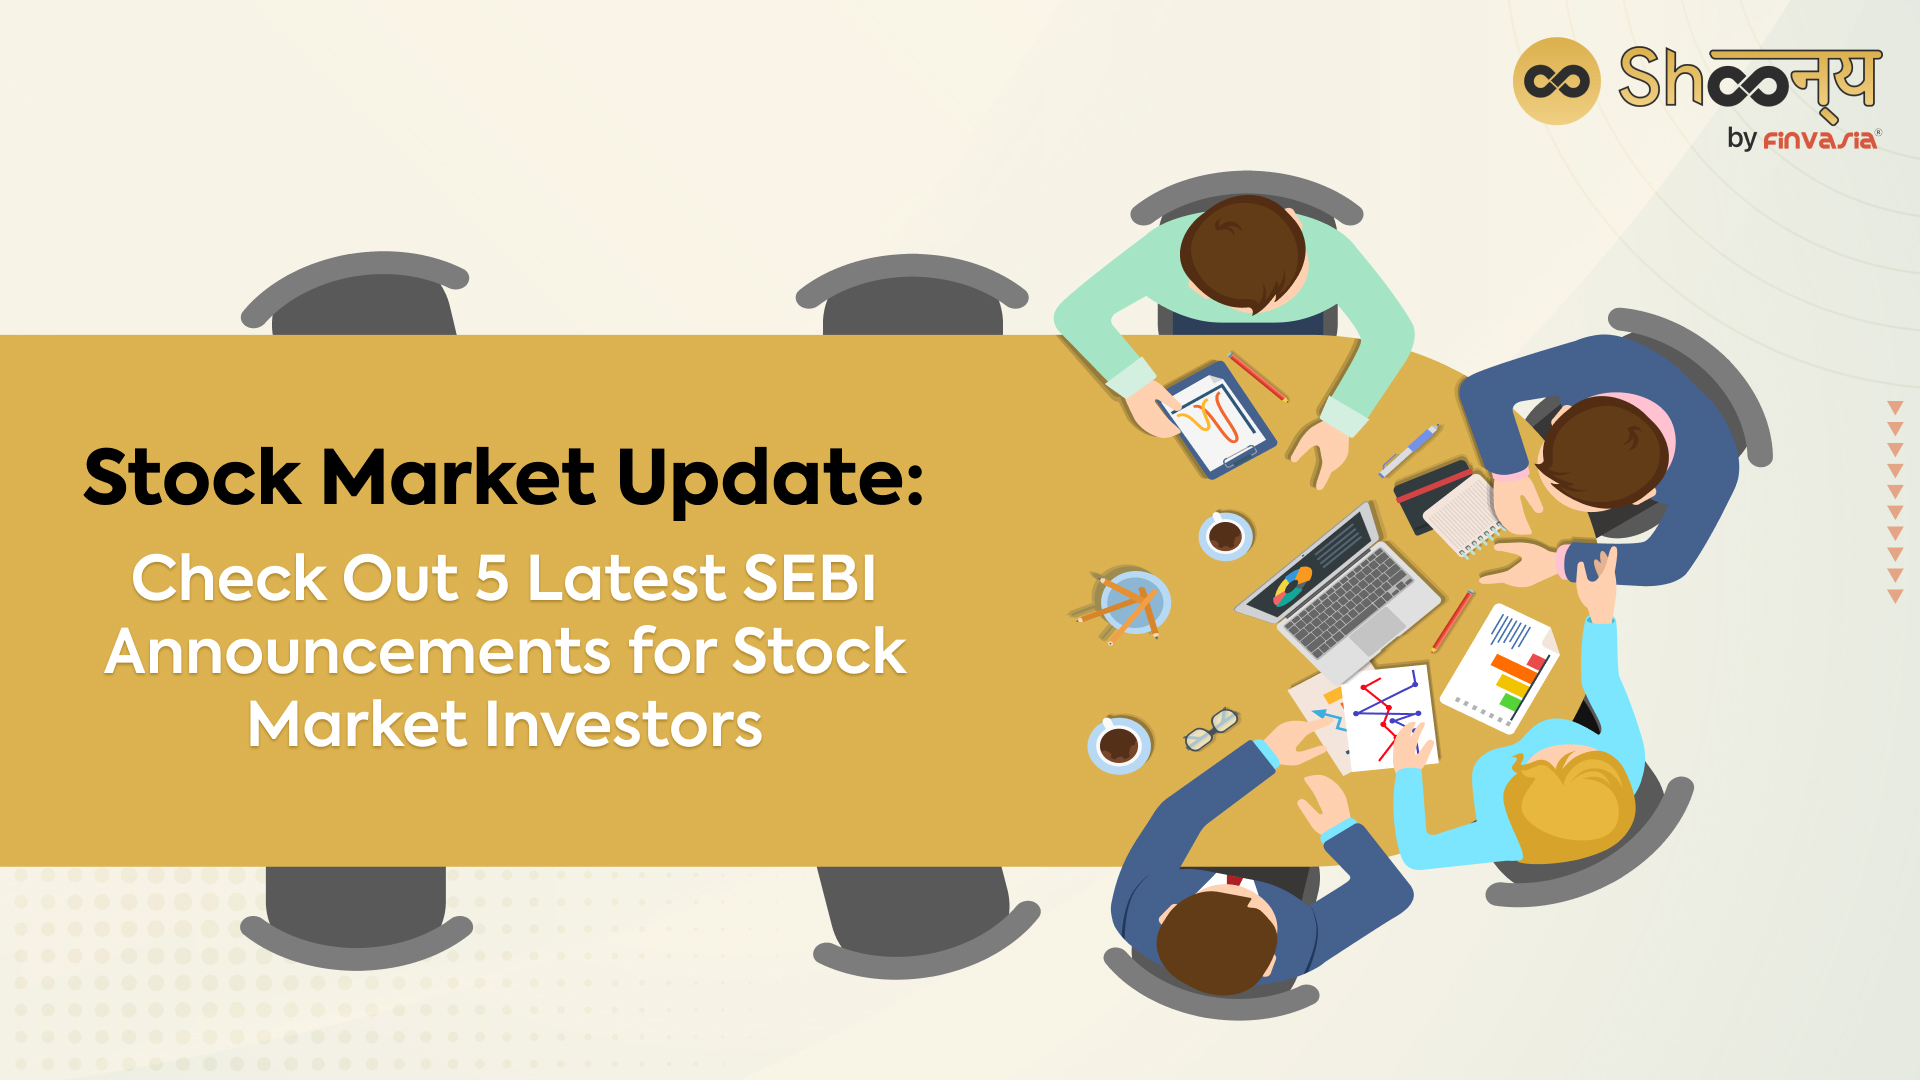 5 Latest SEBI Announcements for Stock Market Investors.